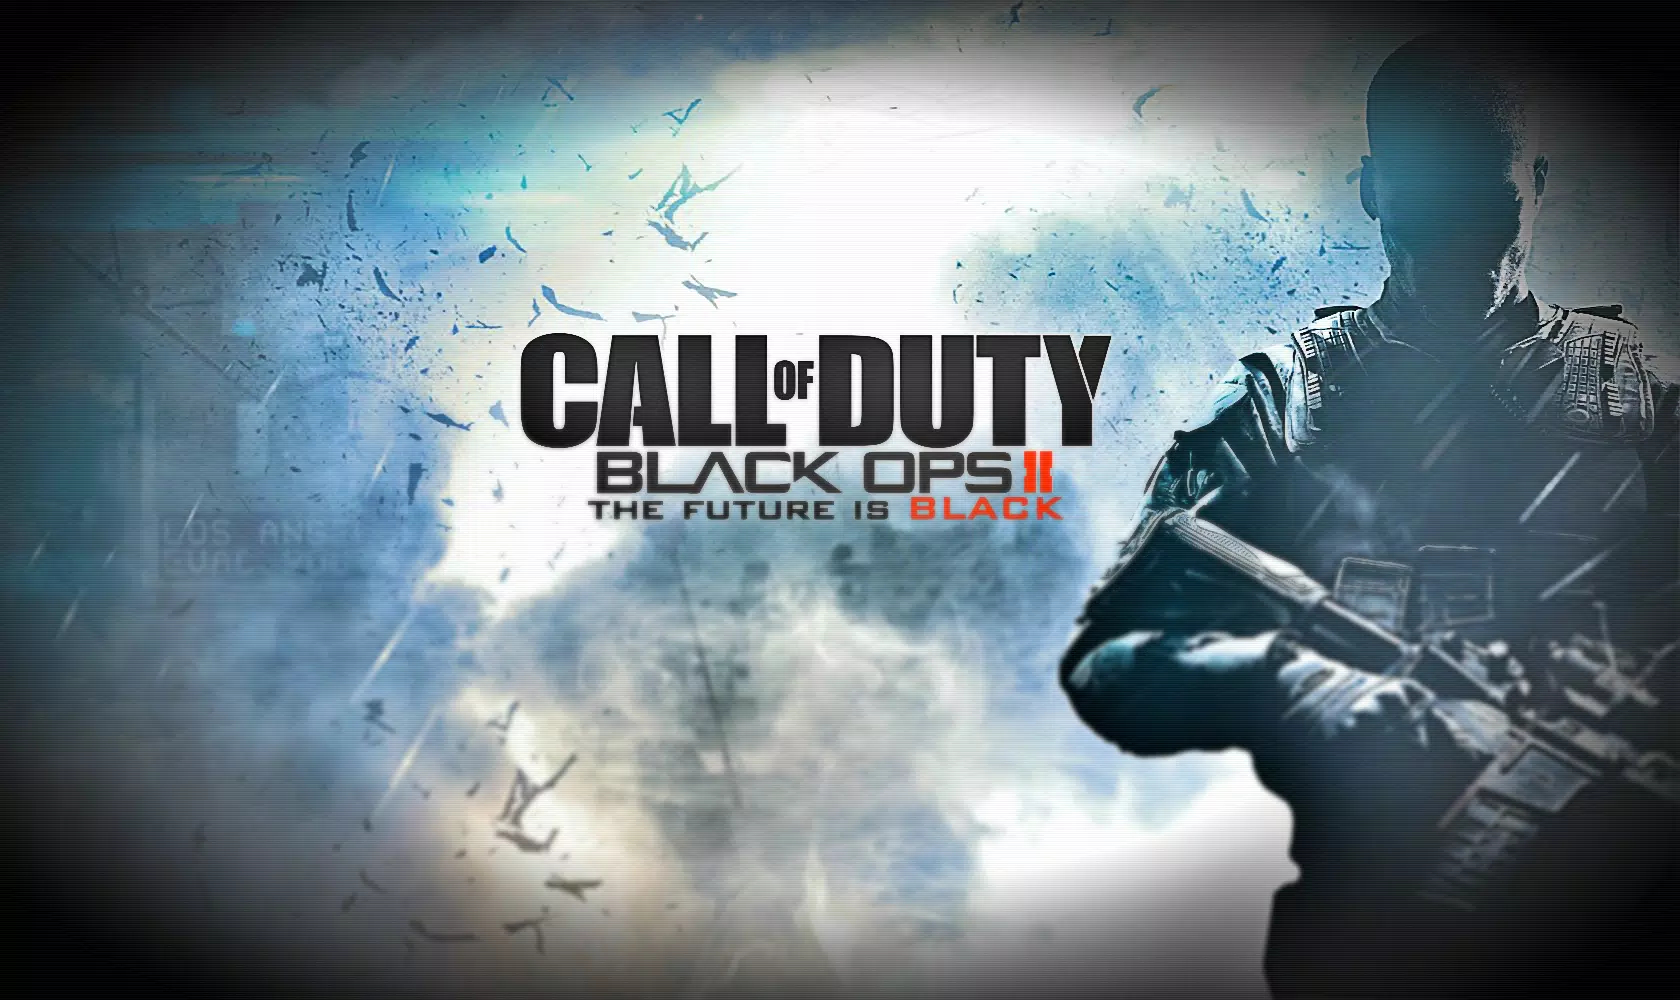 Call Of Duty Black ops III